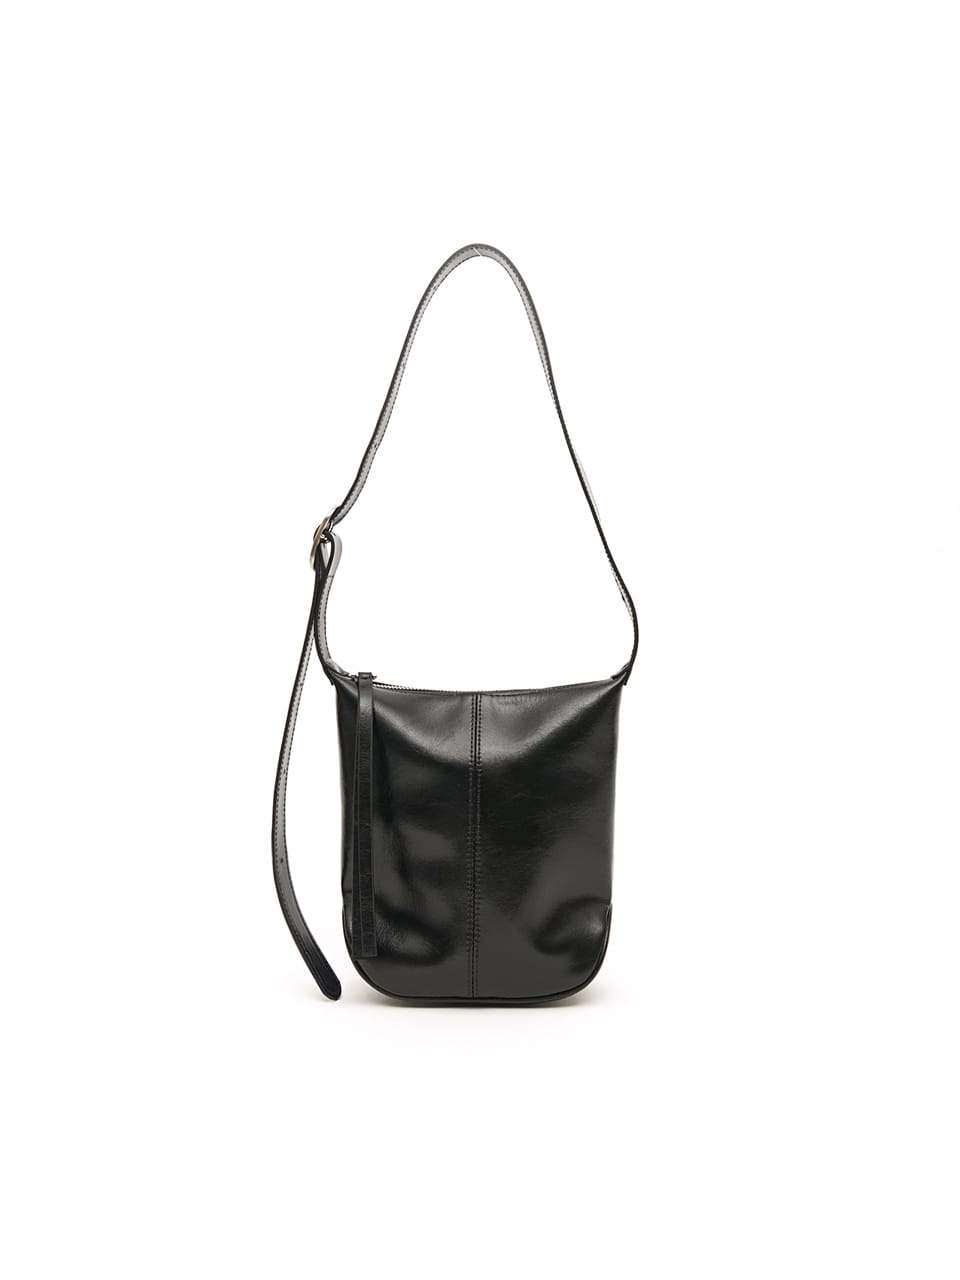 [New 10% off] HAVE mini bag / black